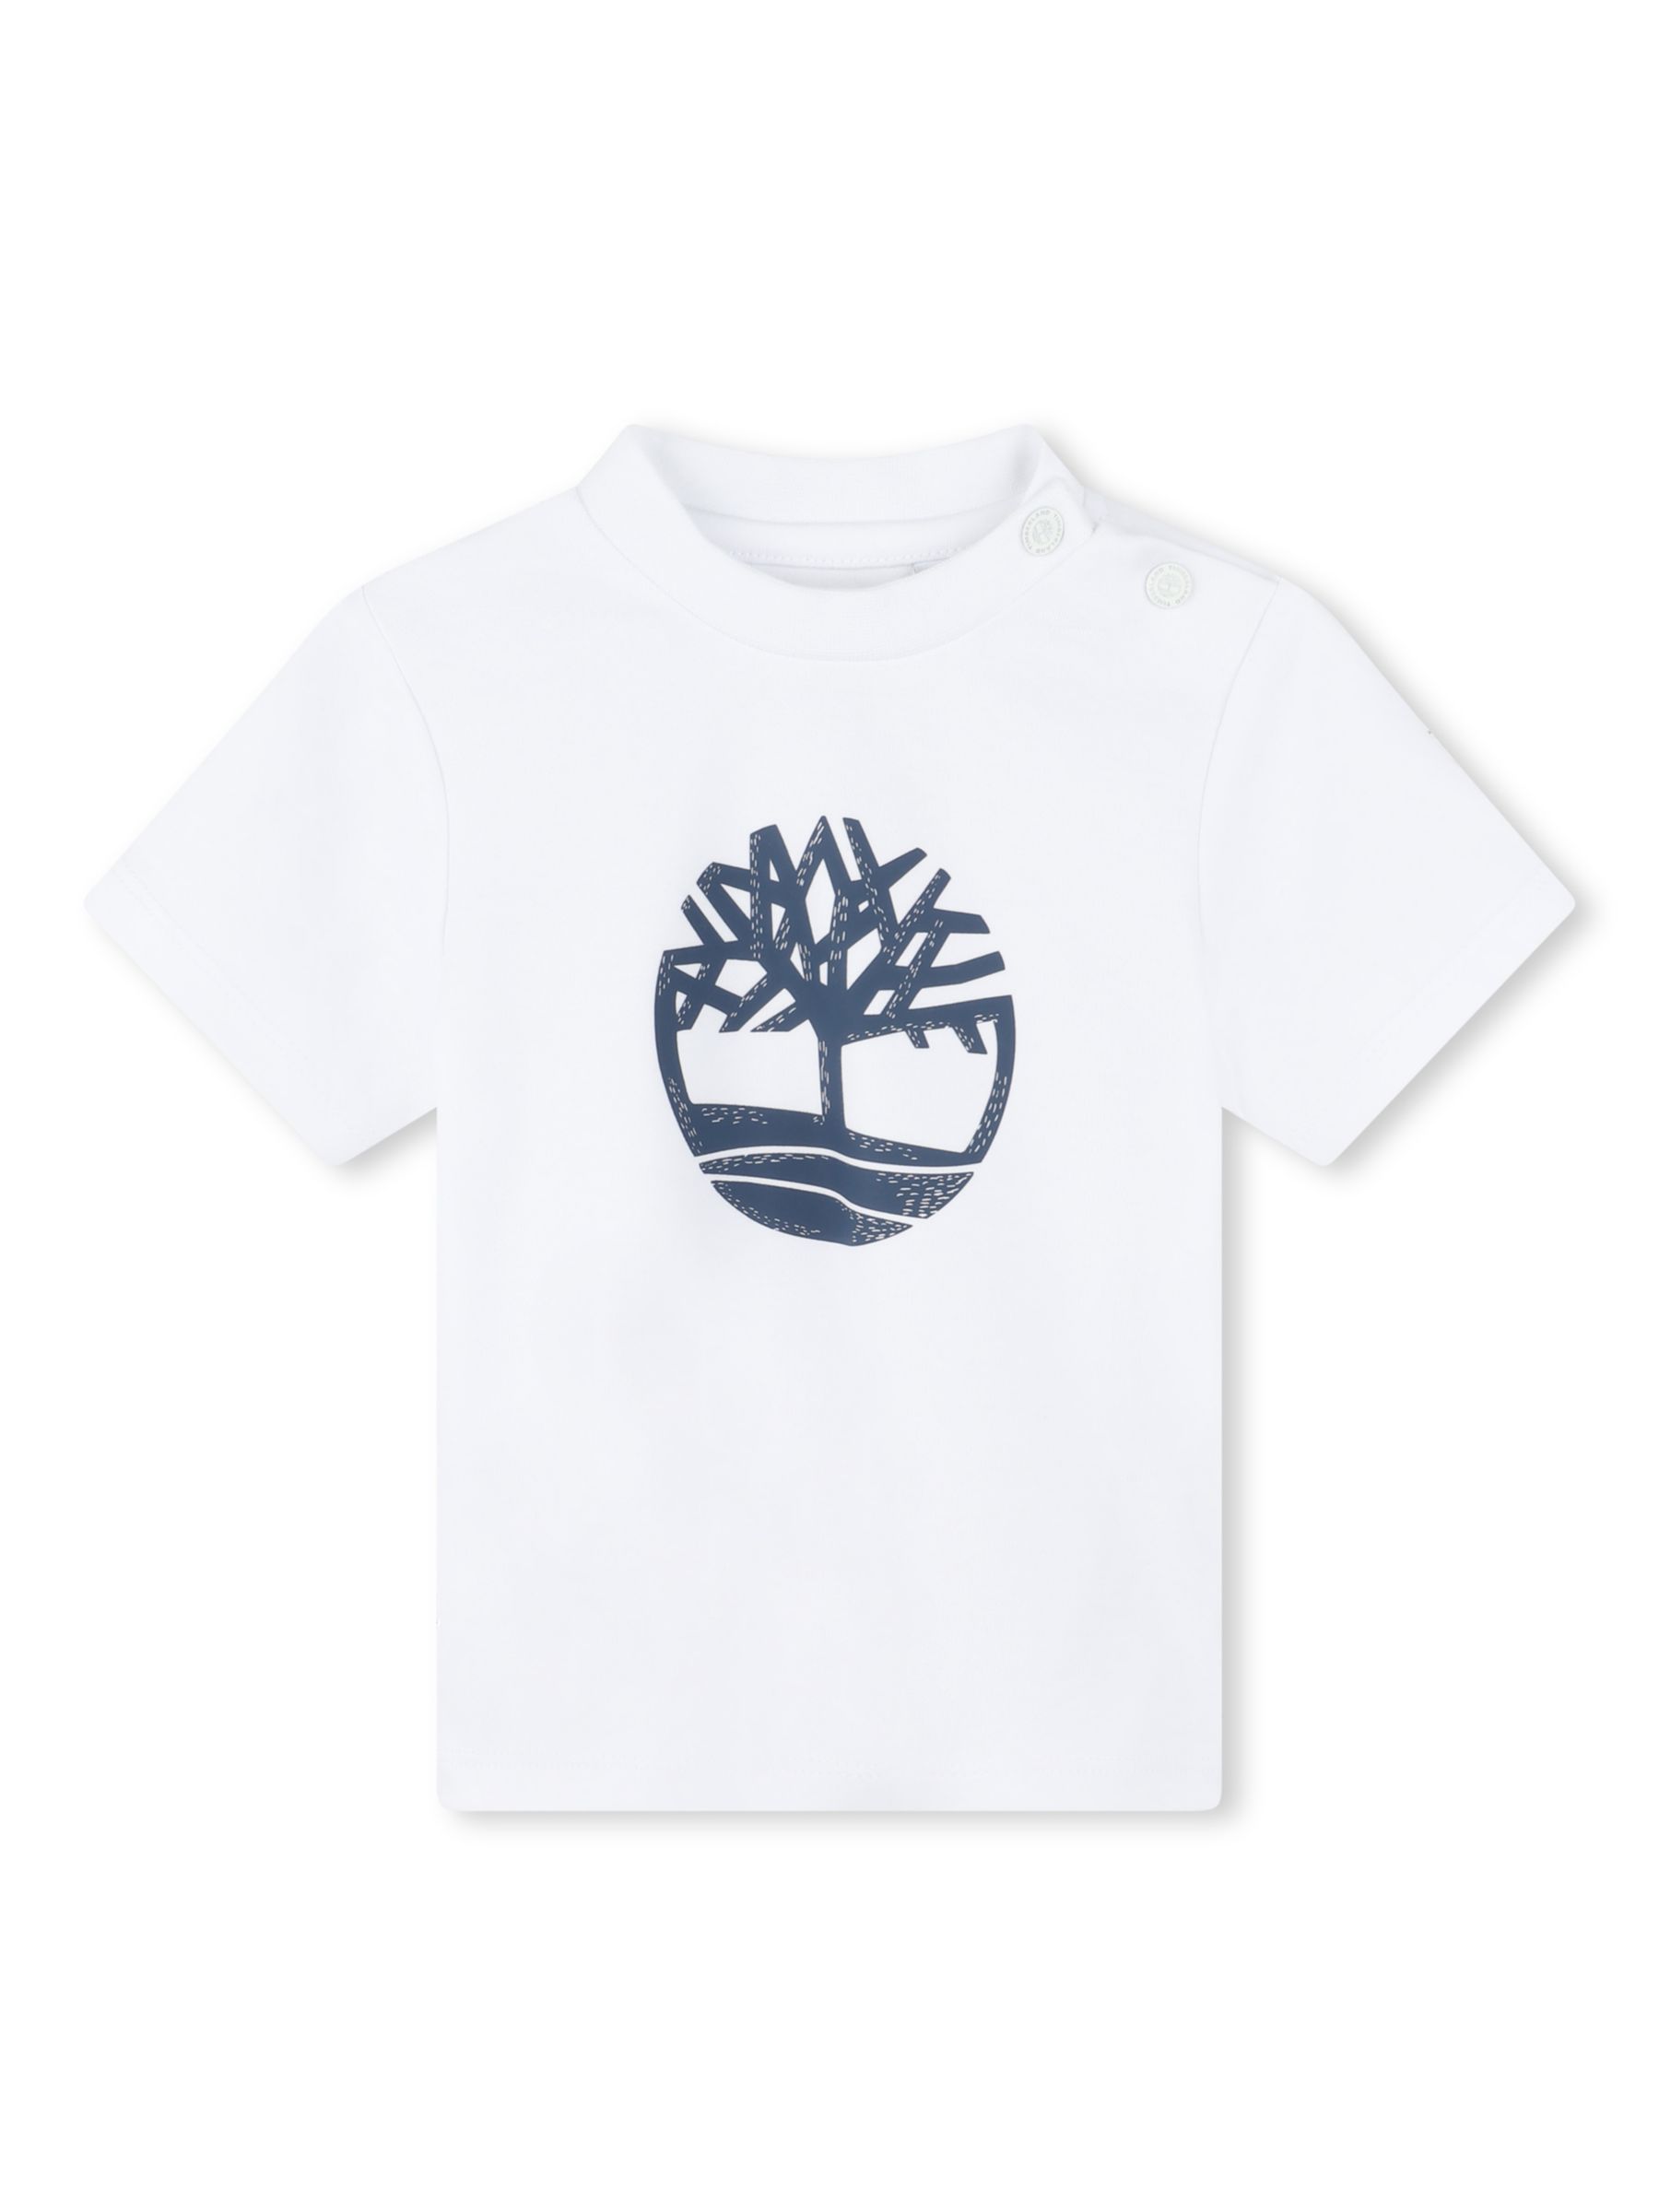 Timberland Baby Logo Graphic T-Shirt, White, 3 months